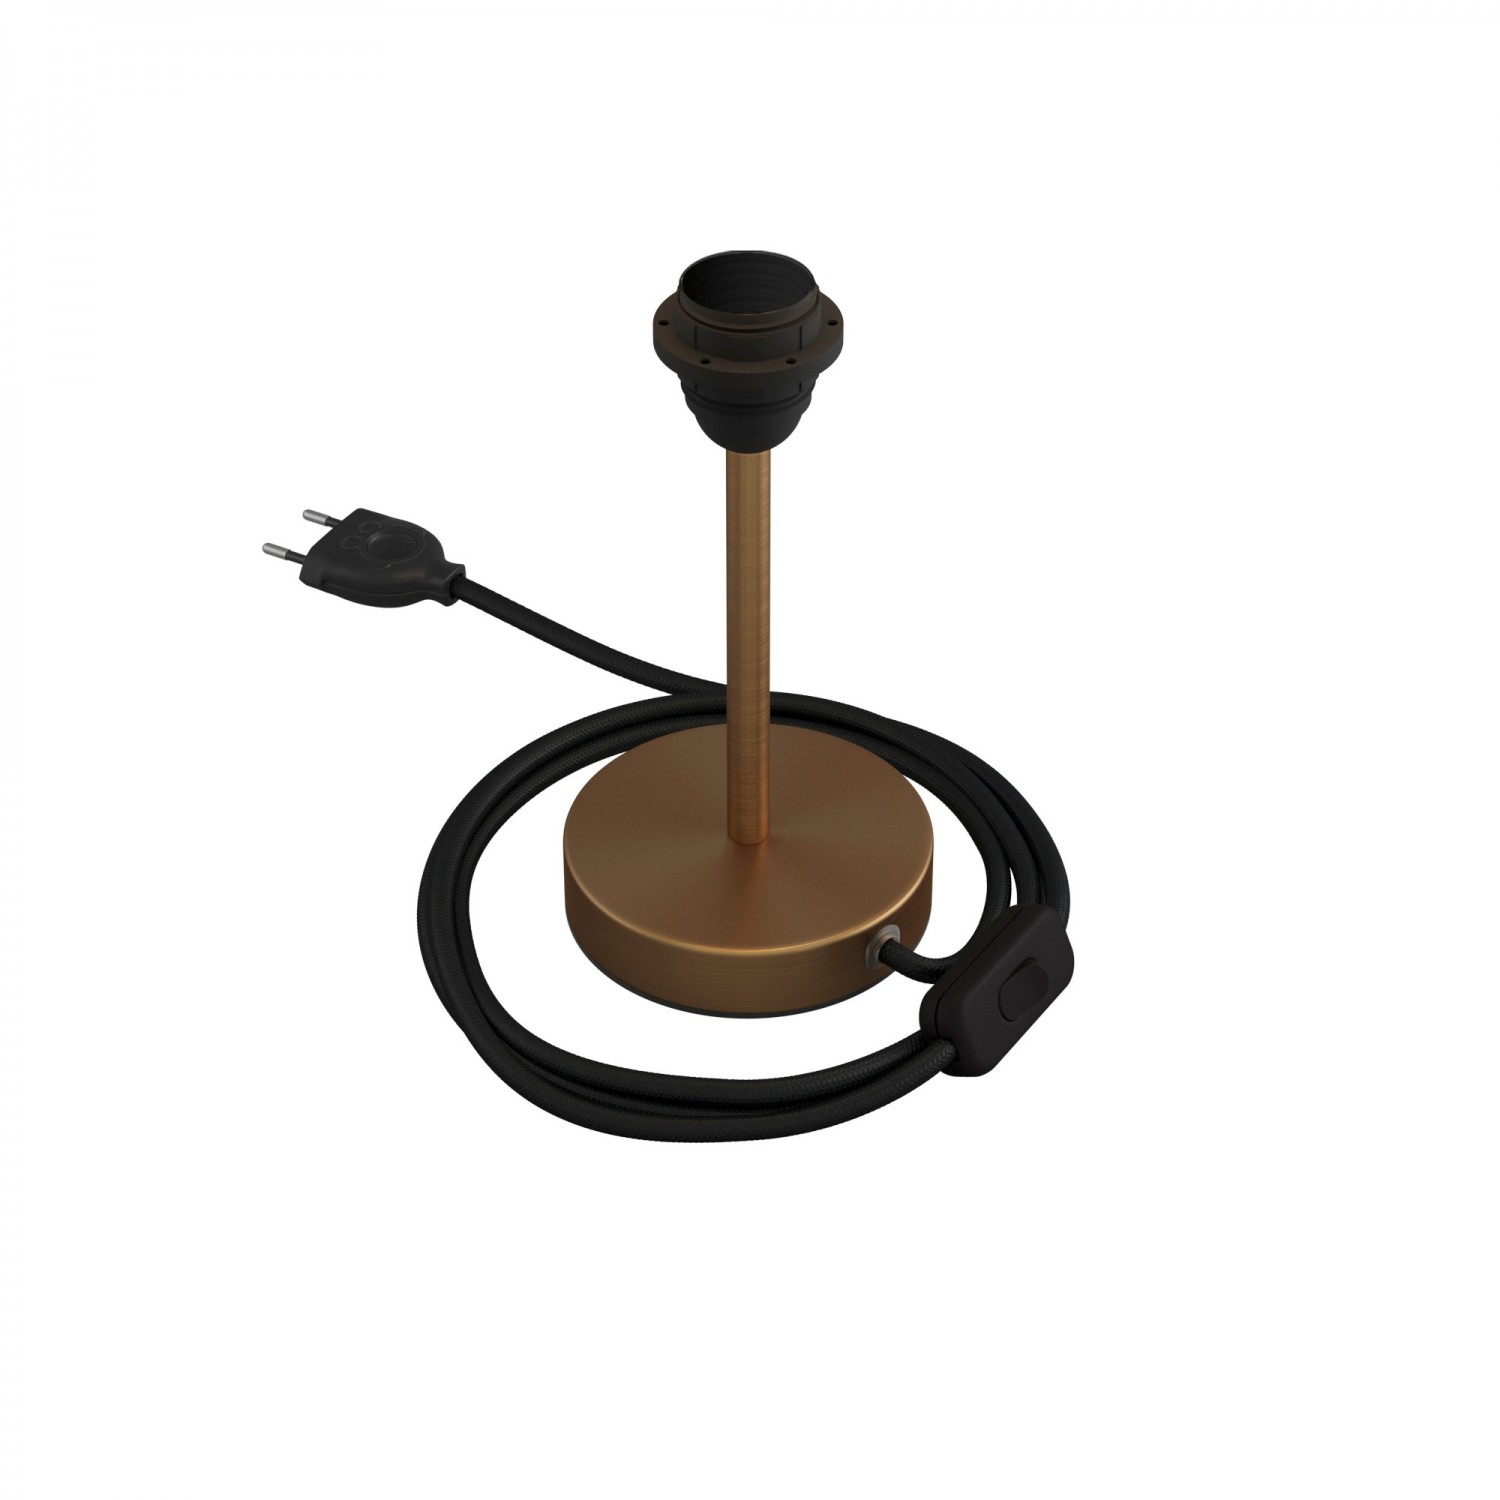 Alzaluce for lampshade - Metal table lamp